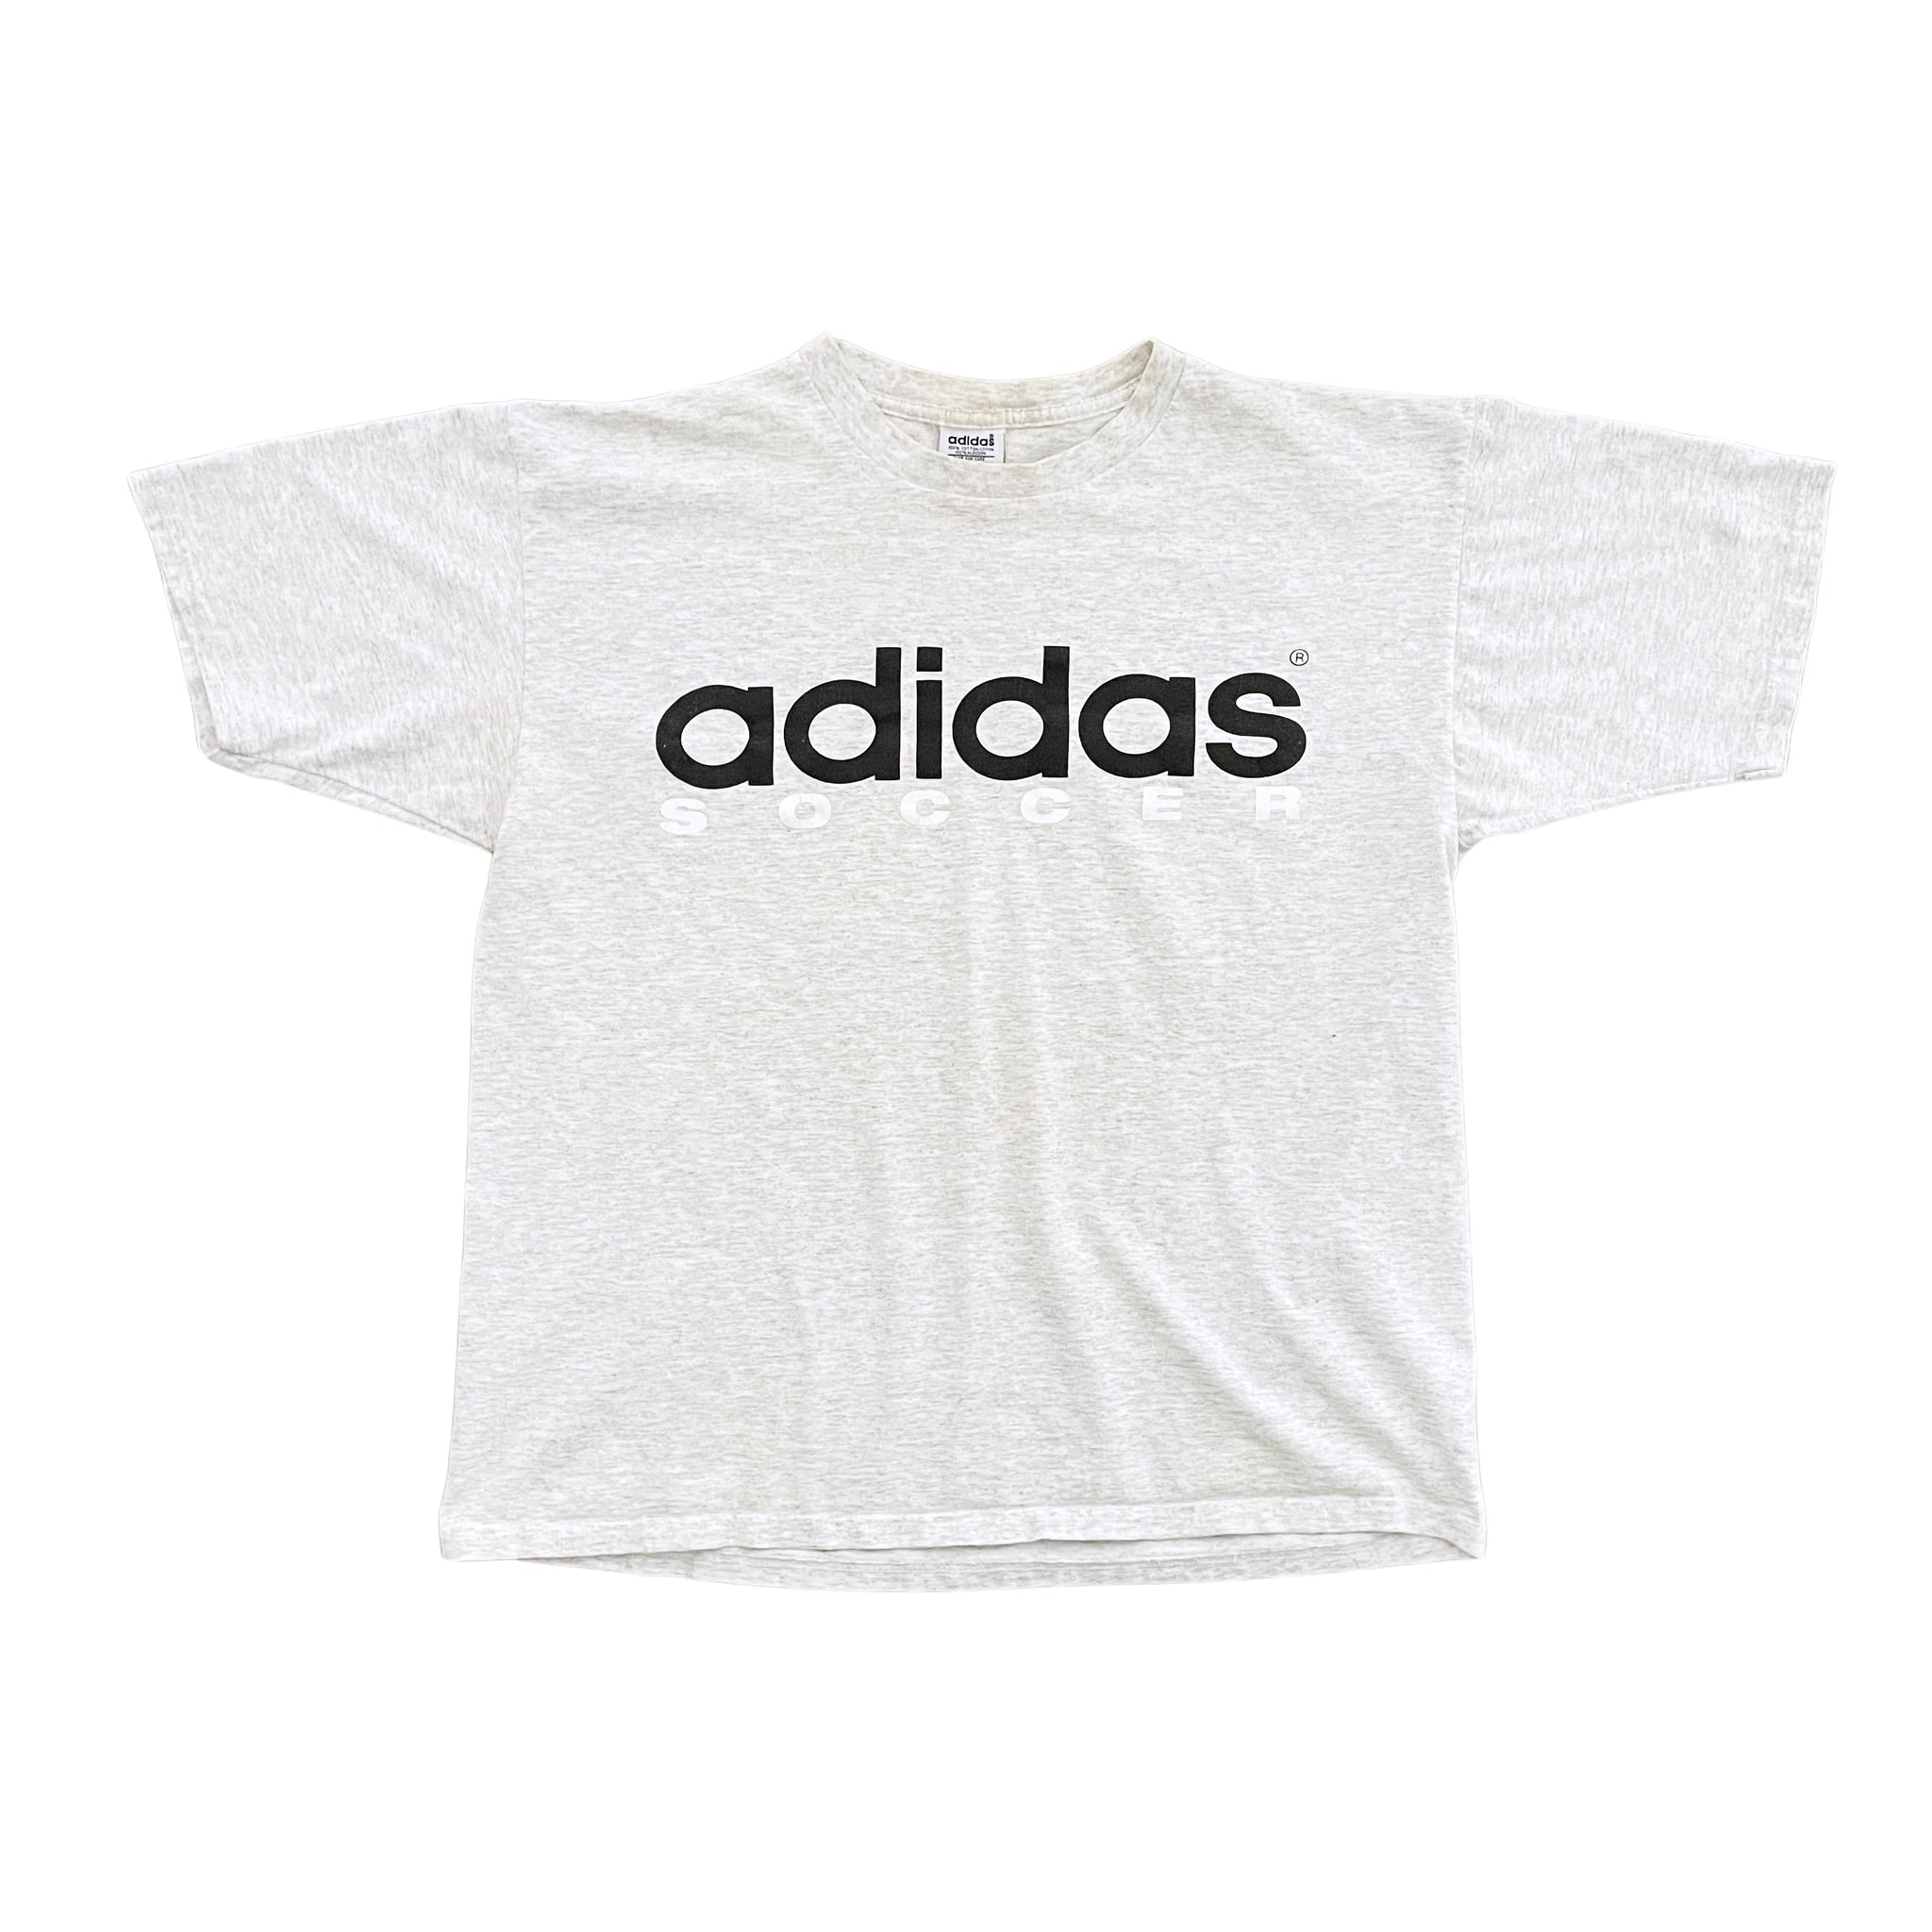 Adidas Soccer T-Shirt - L